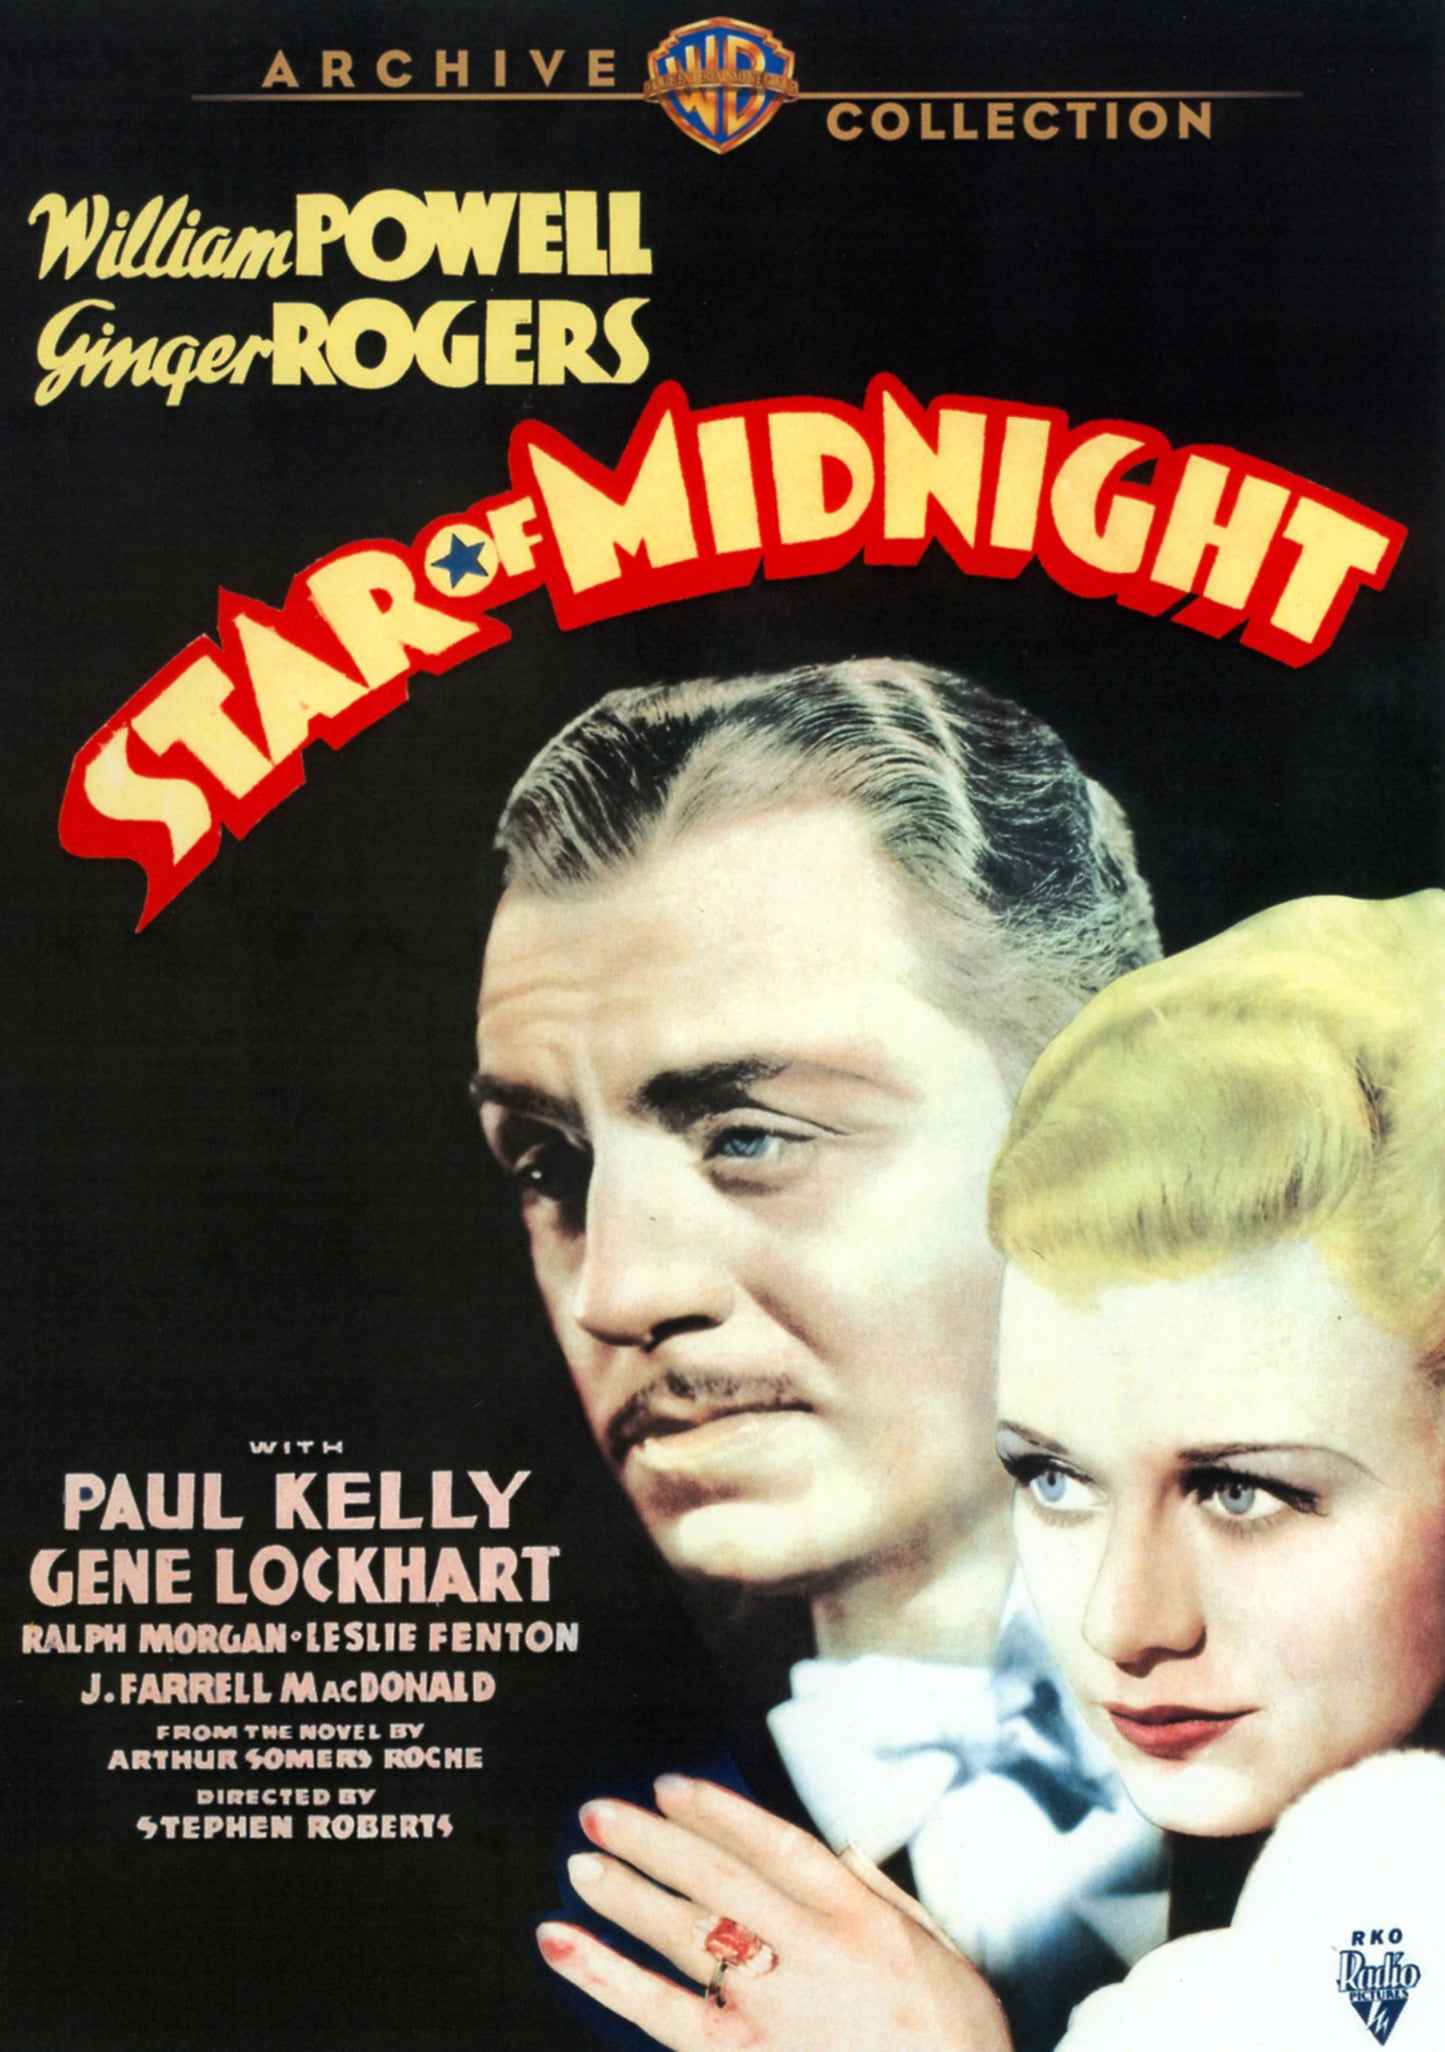 Star of Midnight cover art